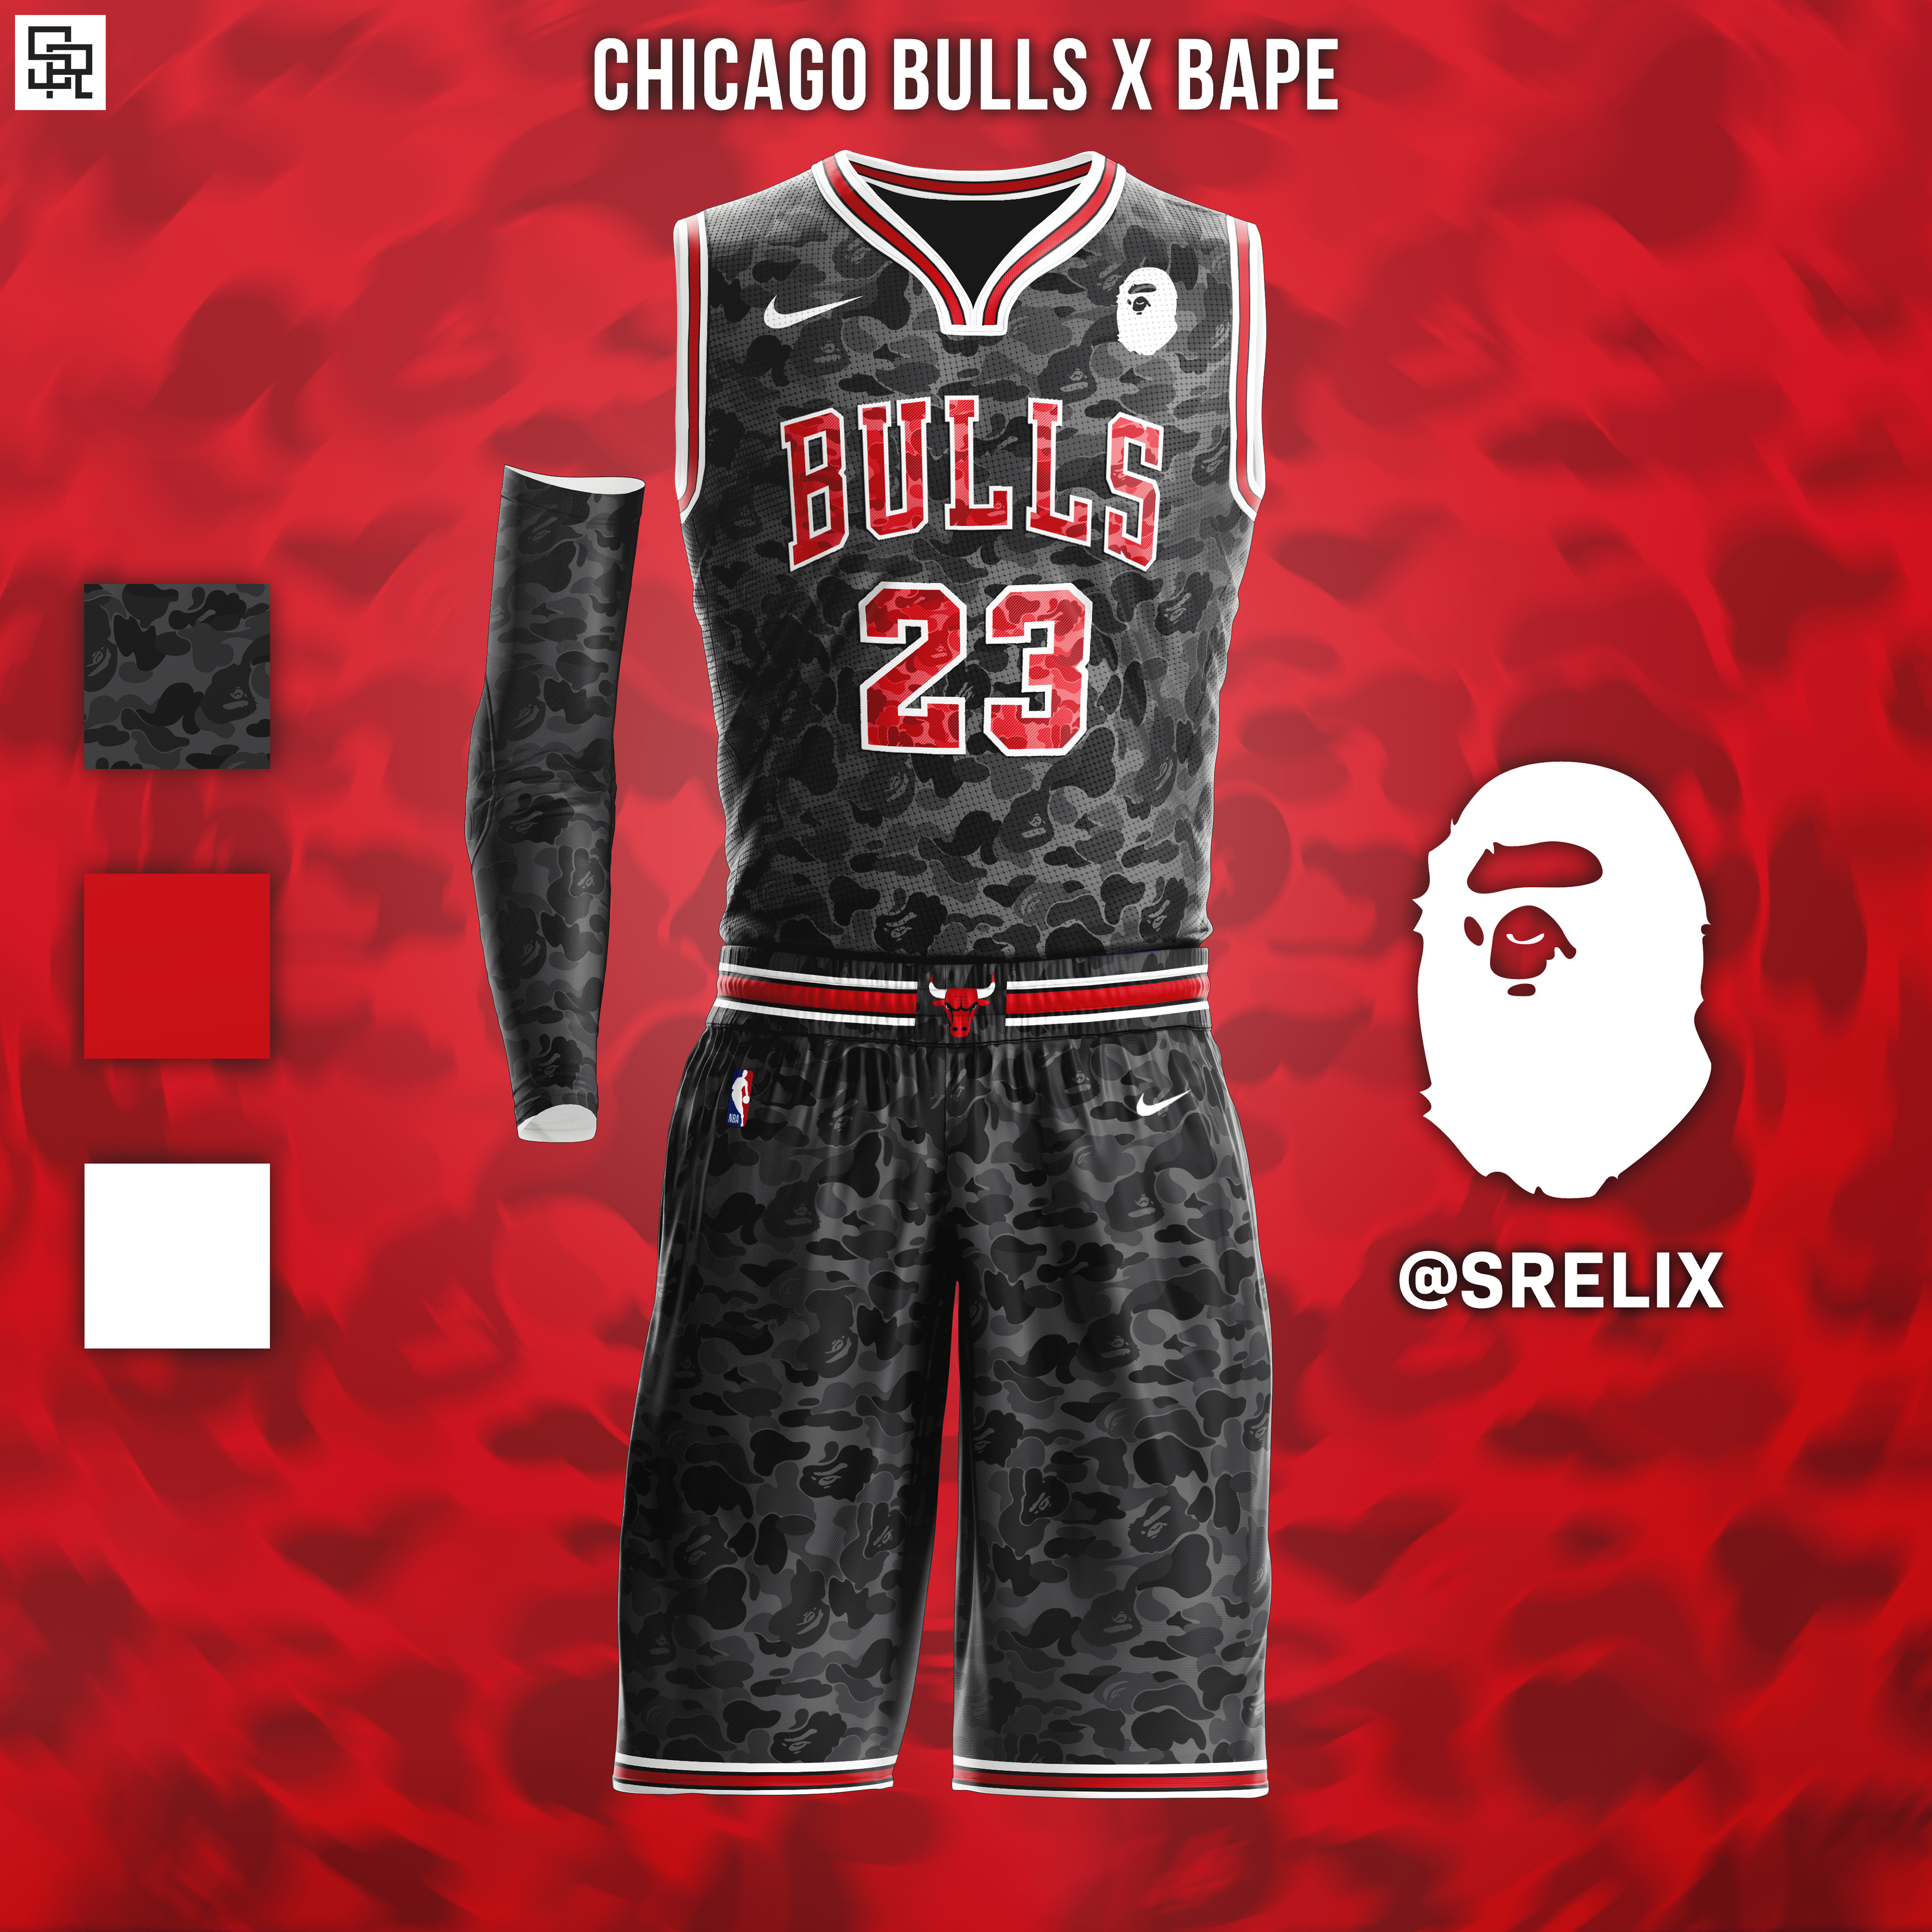 SRELIX Portfolio - Hypebeast NBA/NFL Jersey Concepts